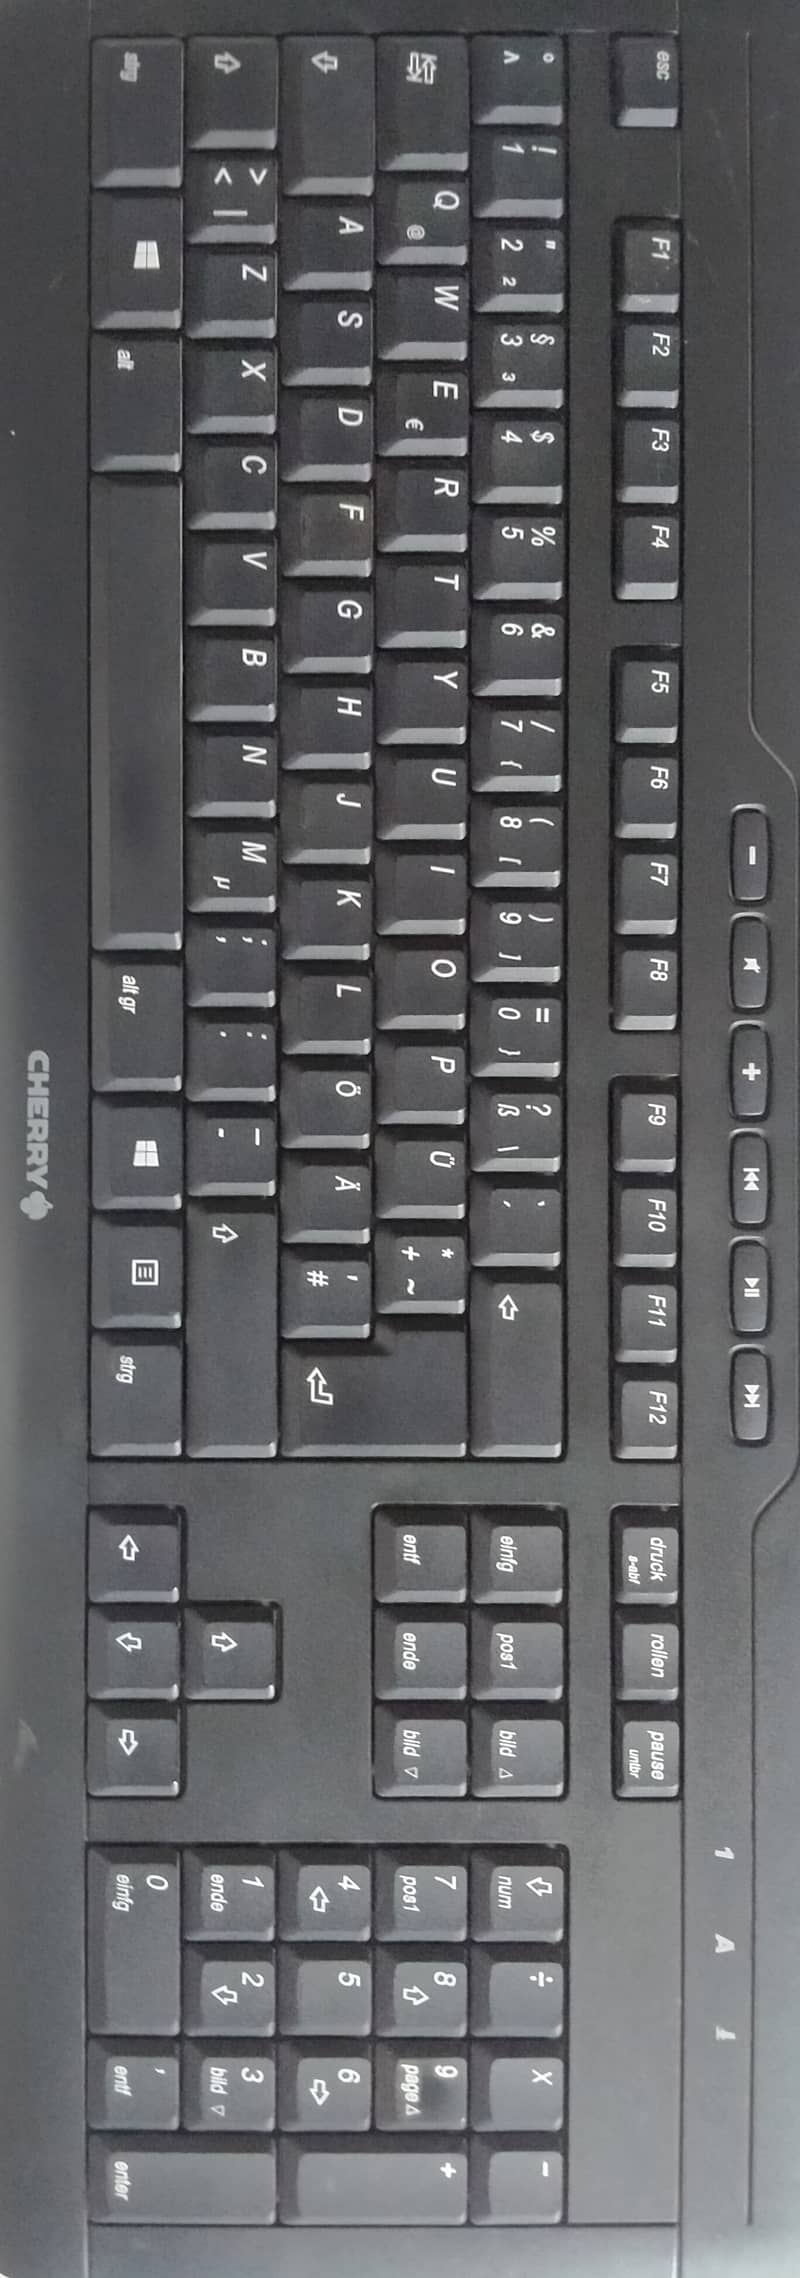 Keyboard 0